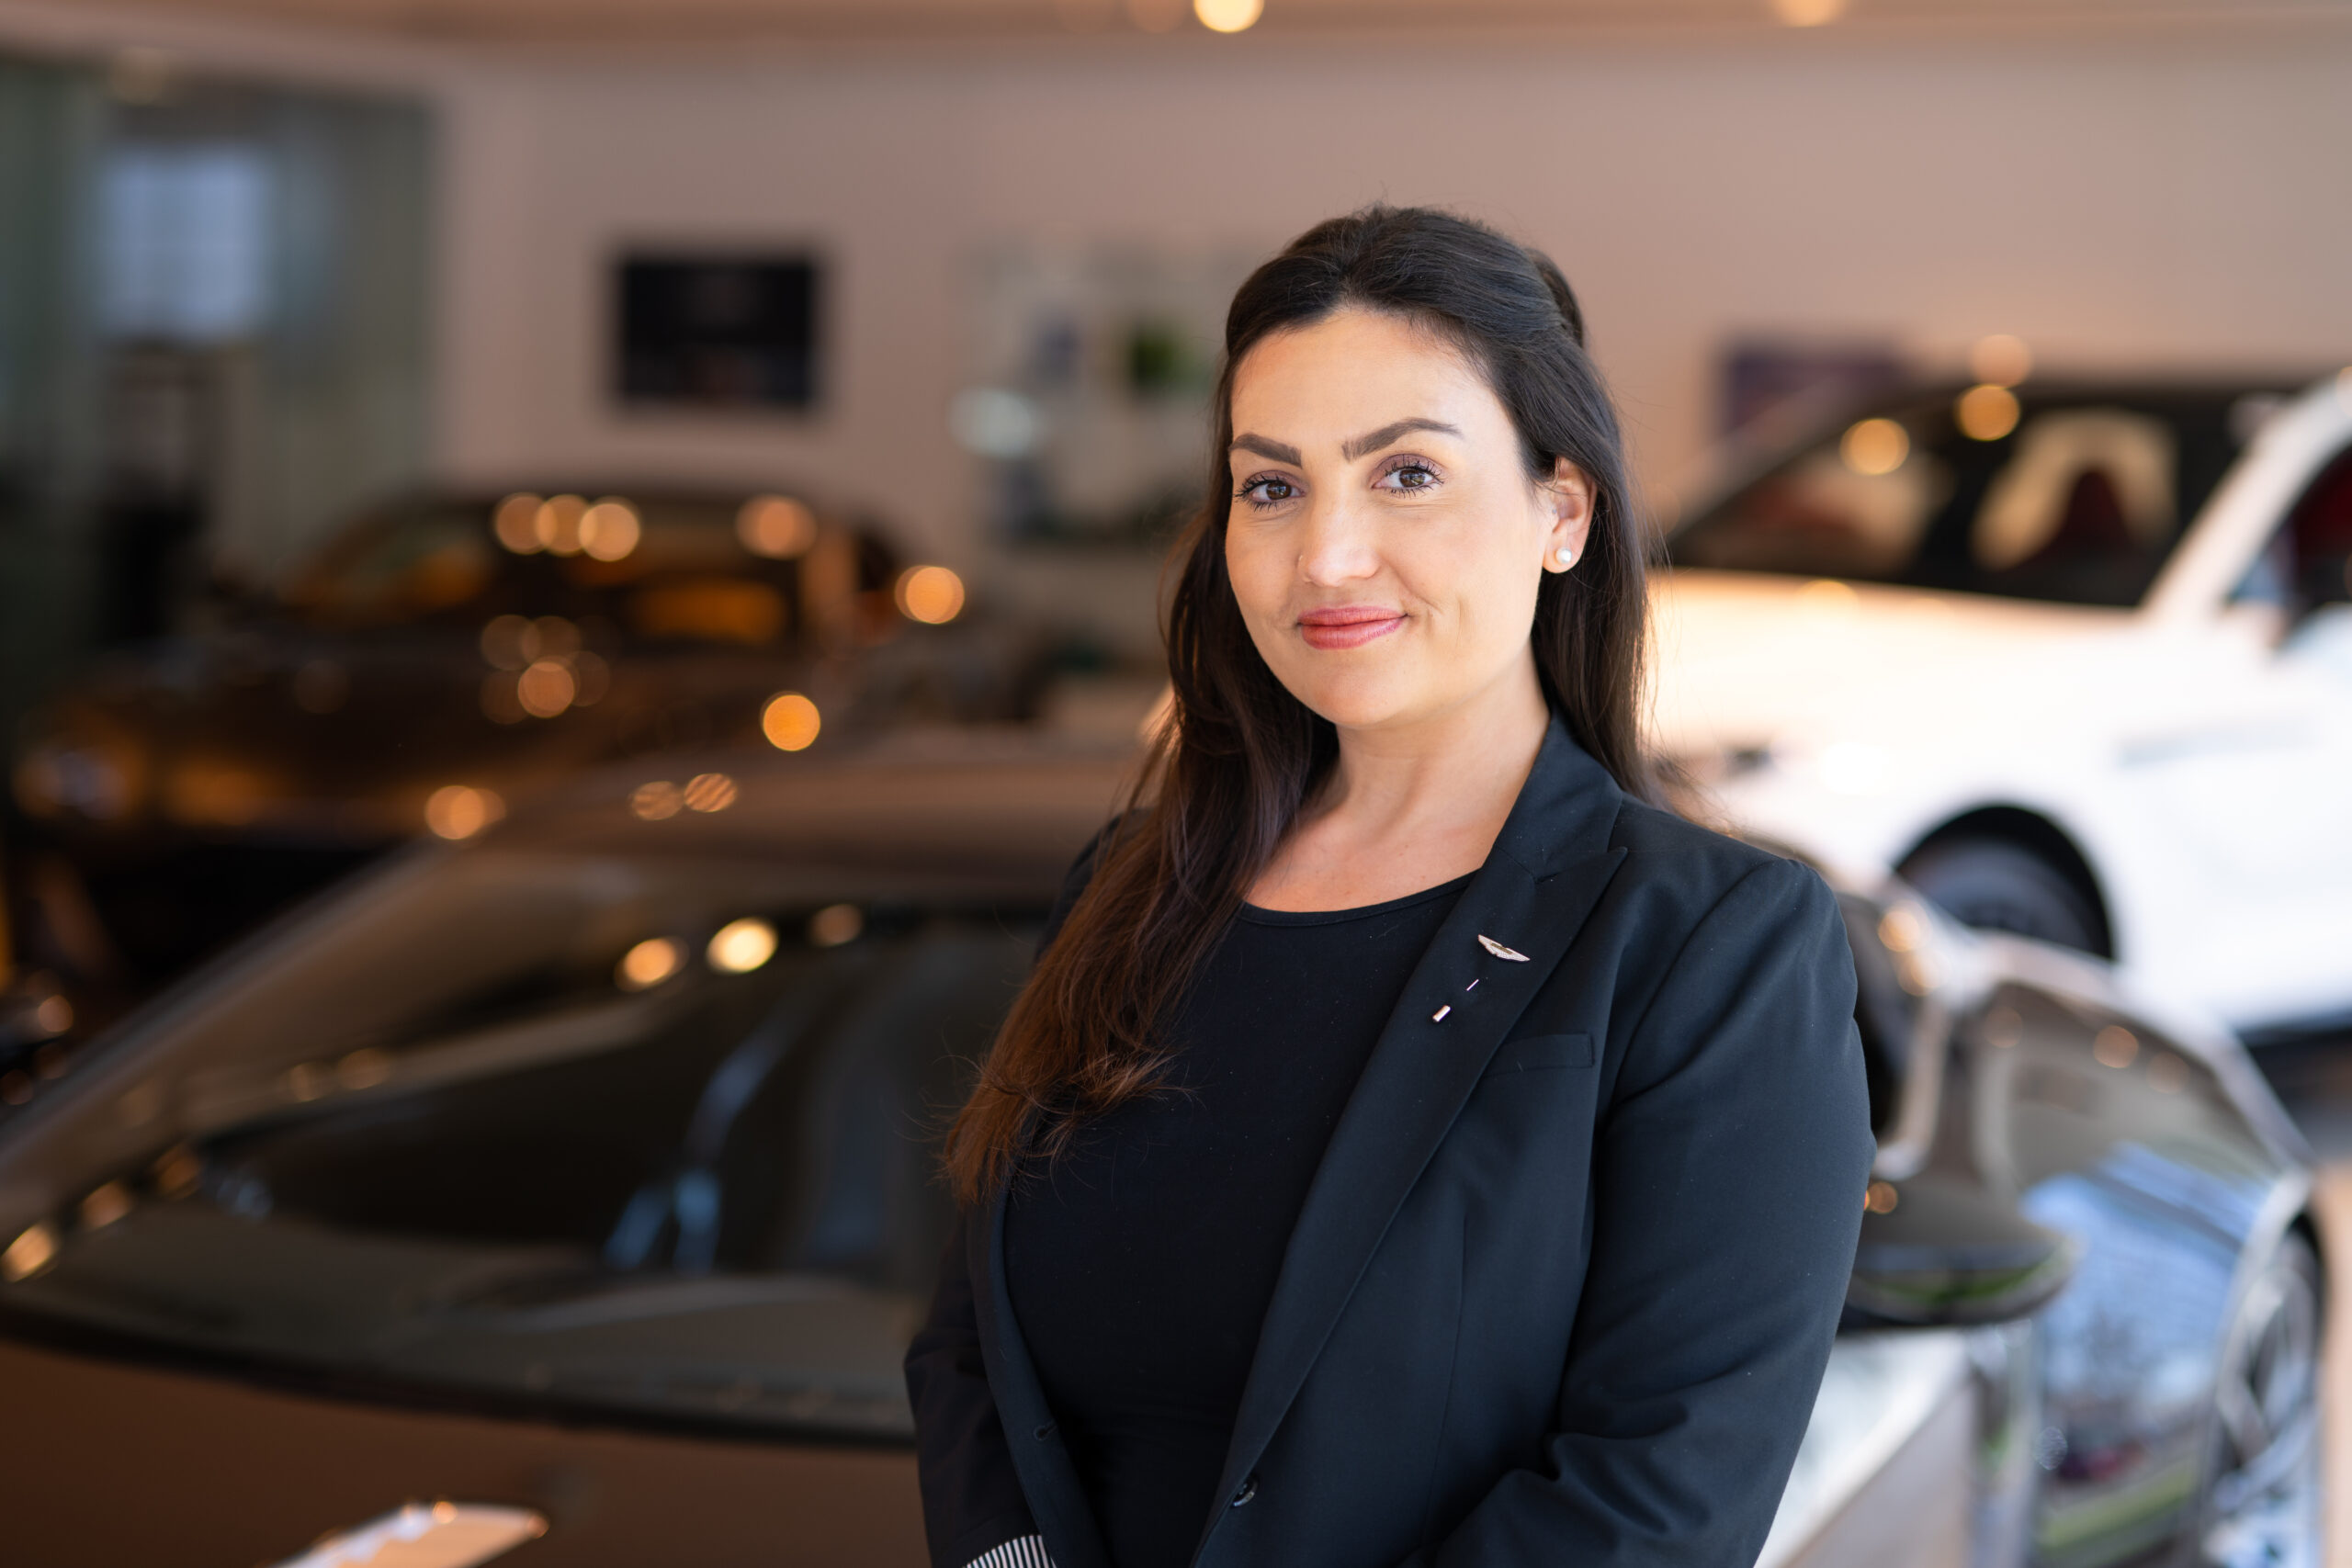 Monica Martirano - Executive Sales Assistant - Aston Martin